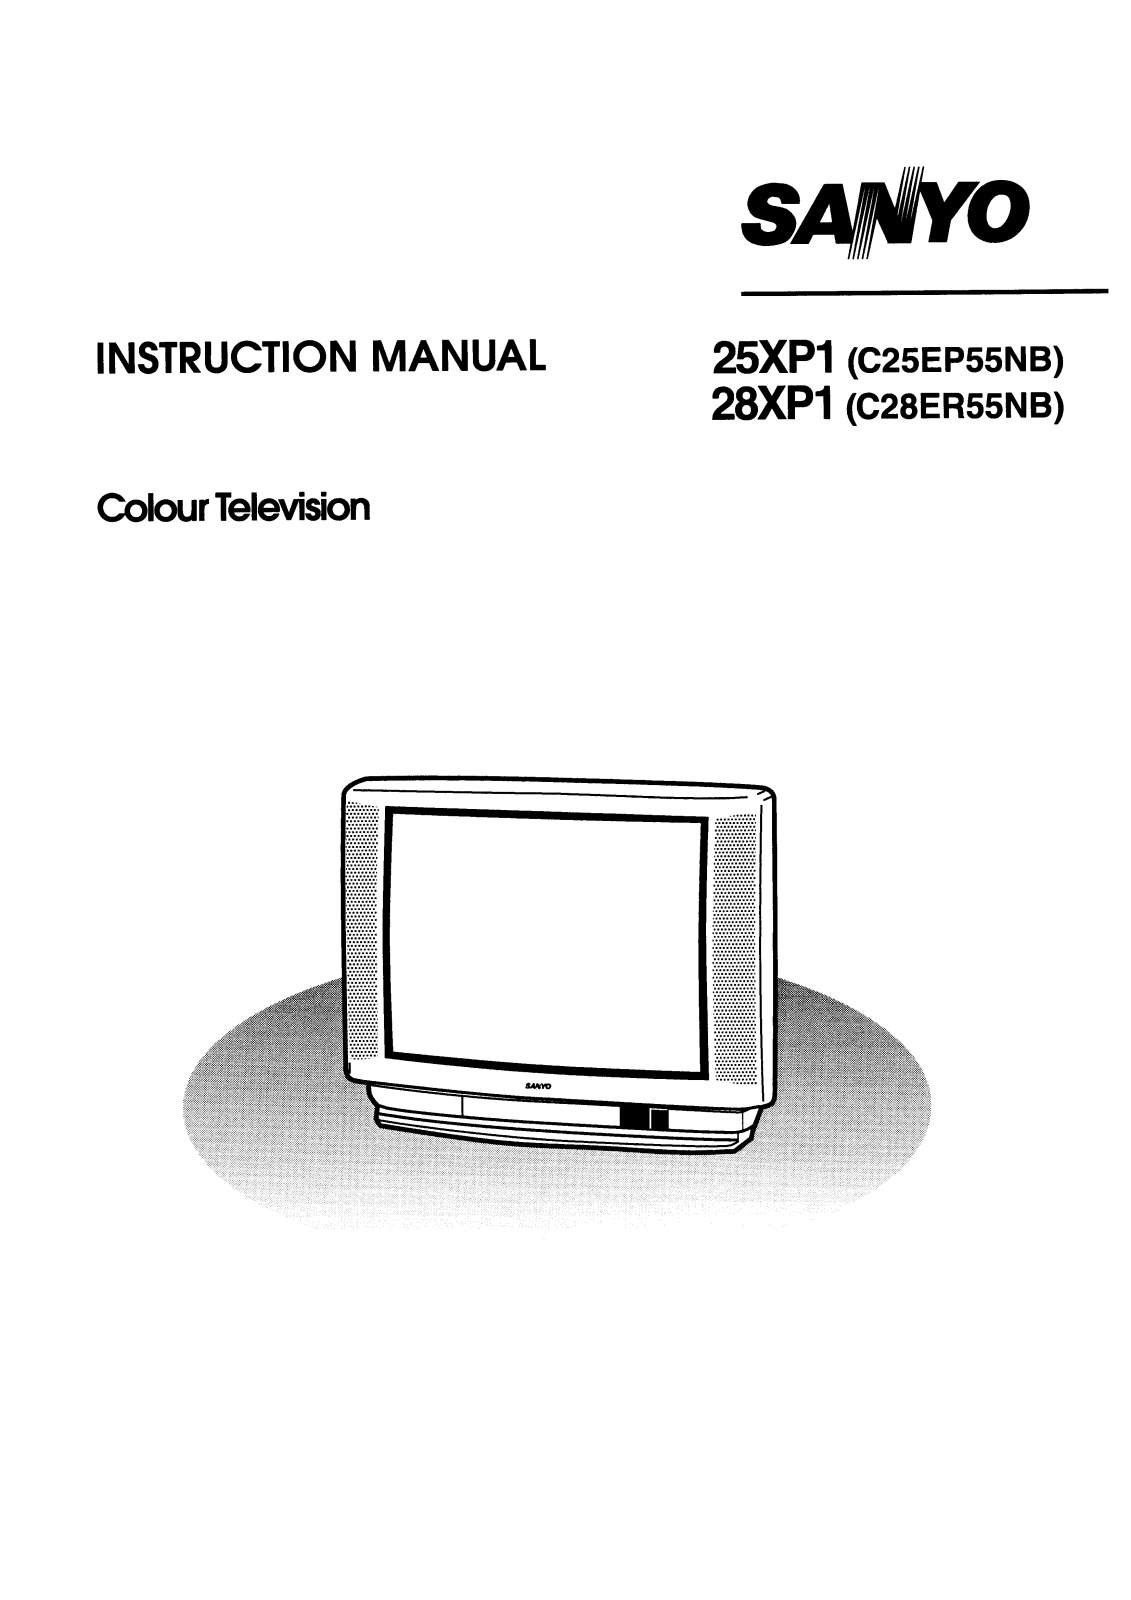 Sanyo 28XP1, 25XP1 Instruction Manual